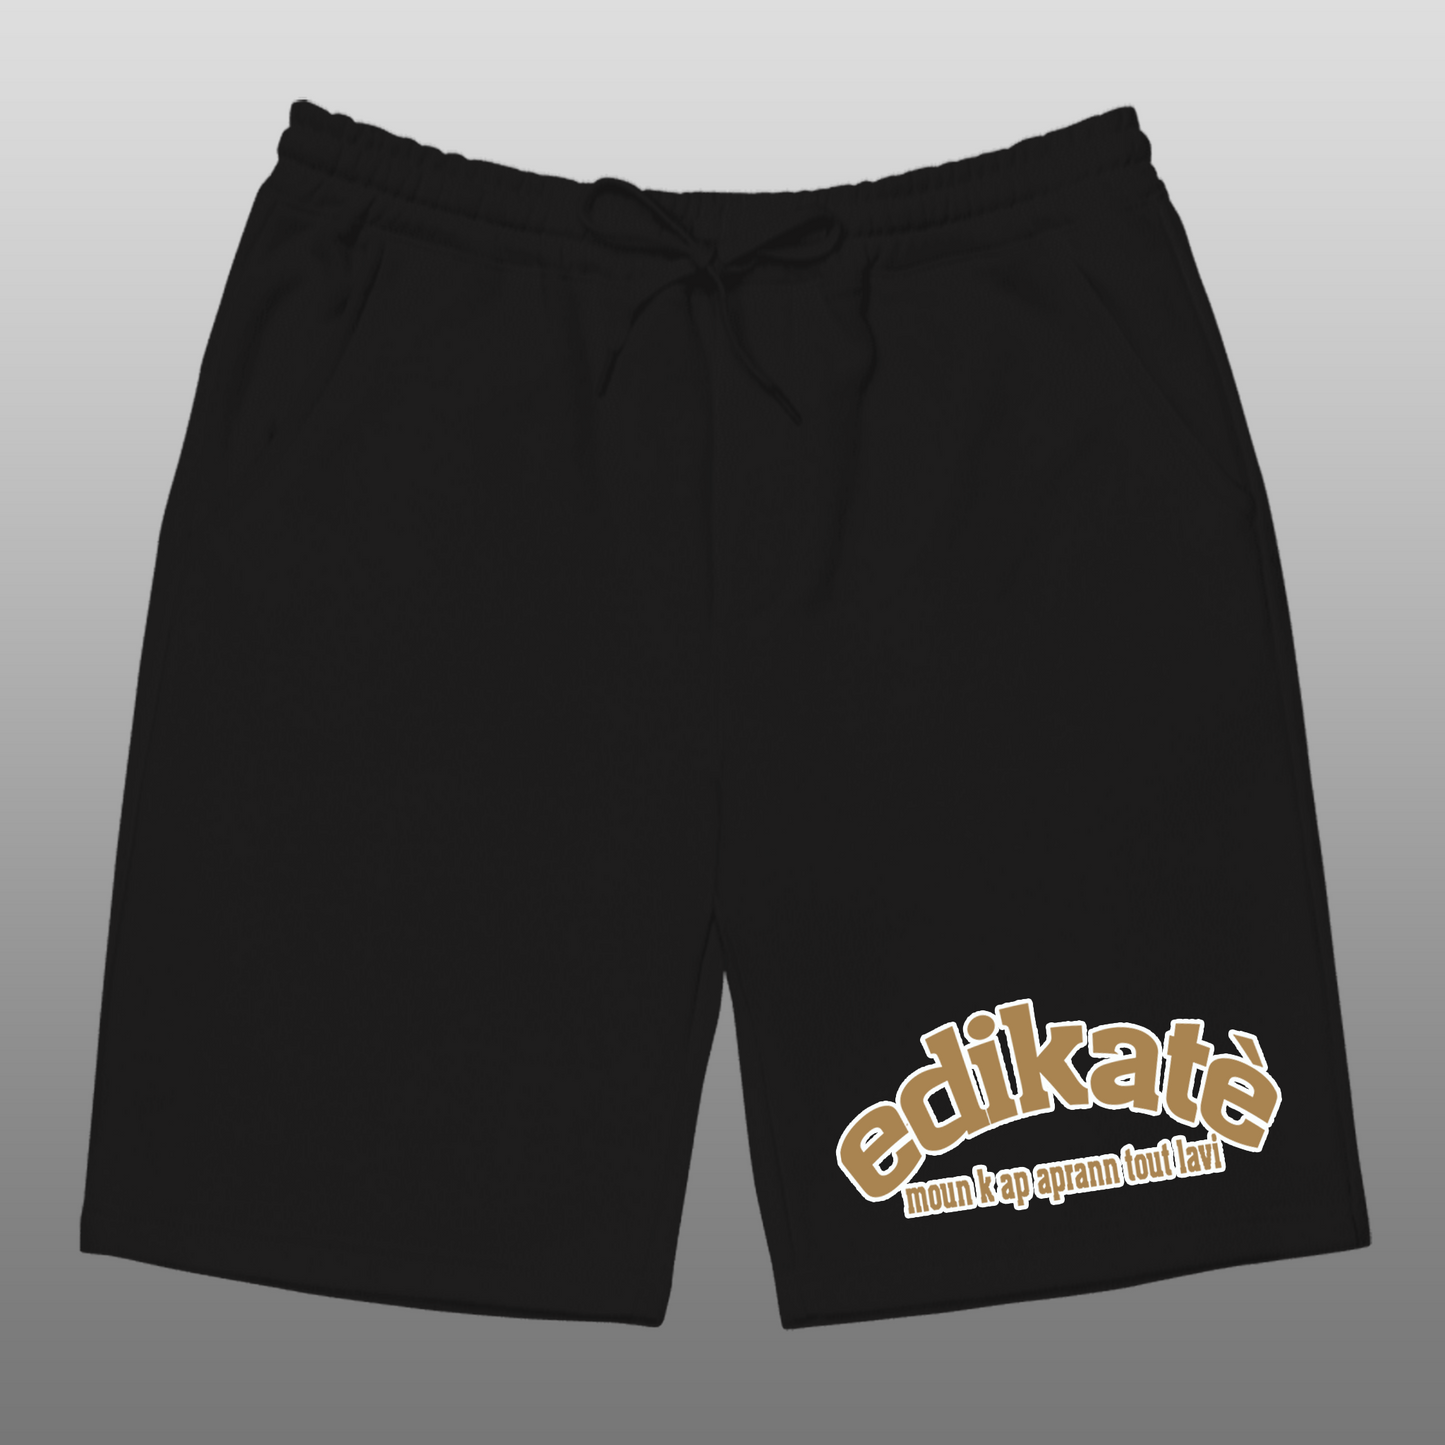 Educator (Creole) Black Shorts